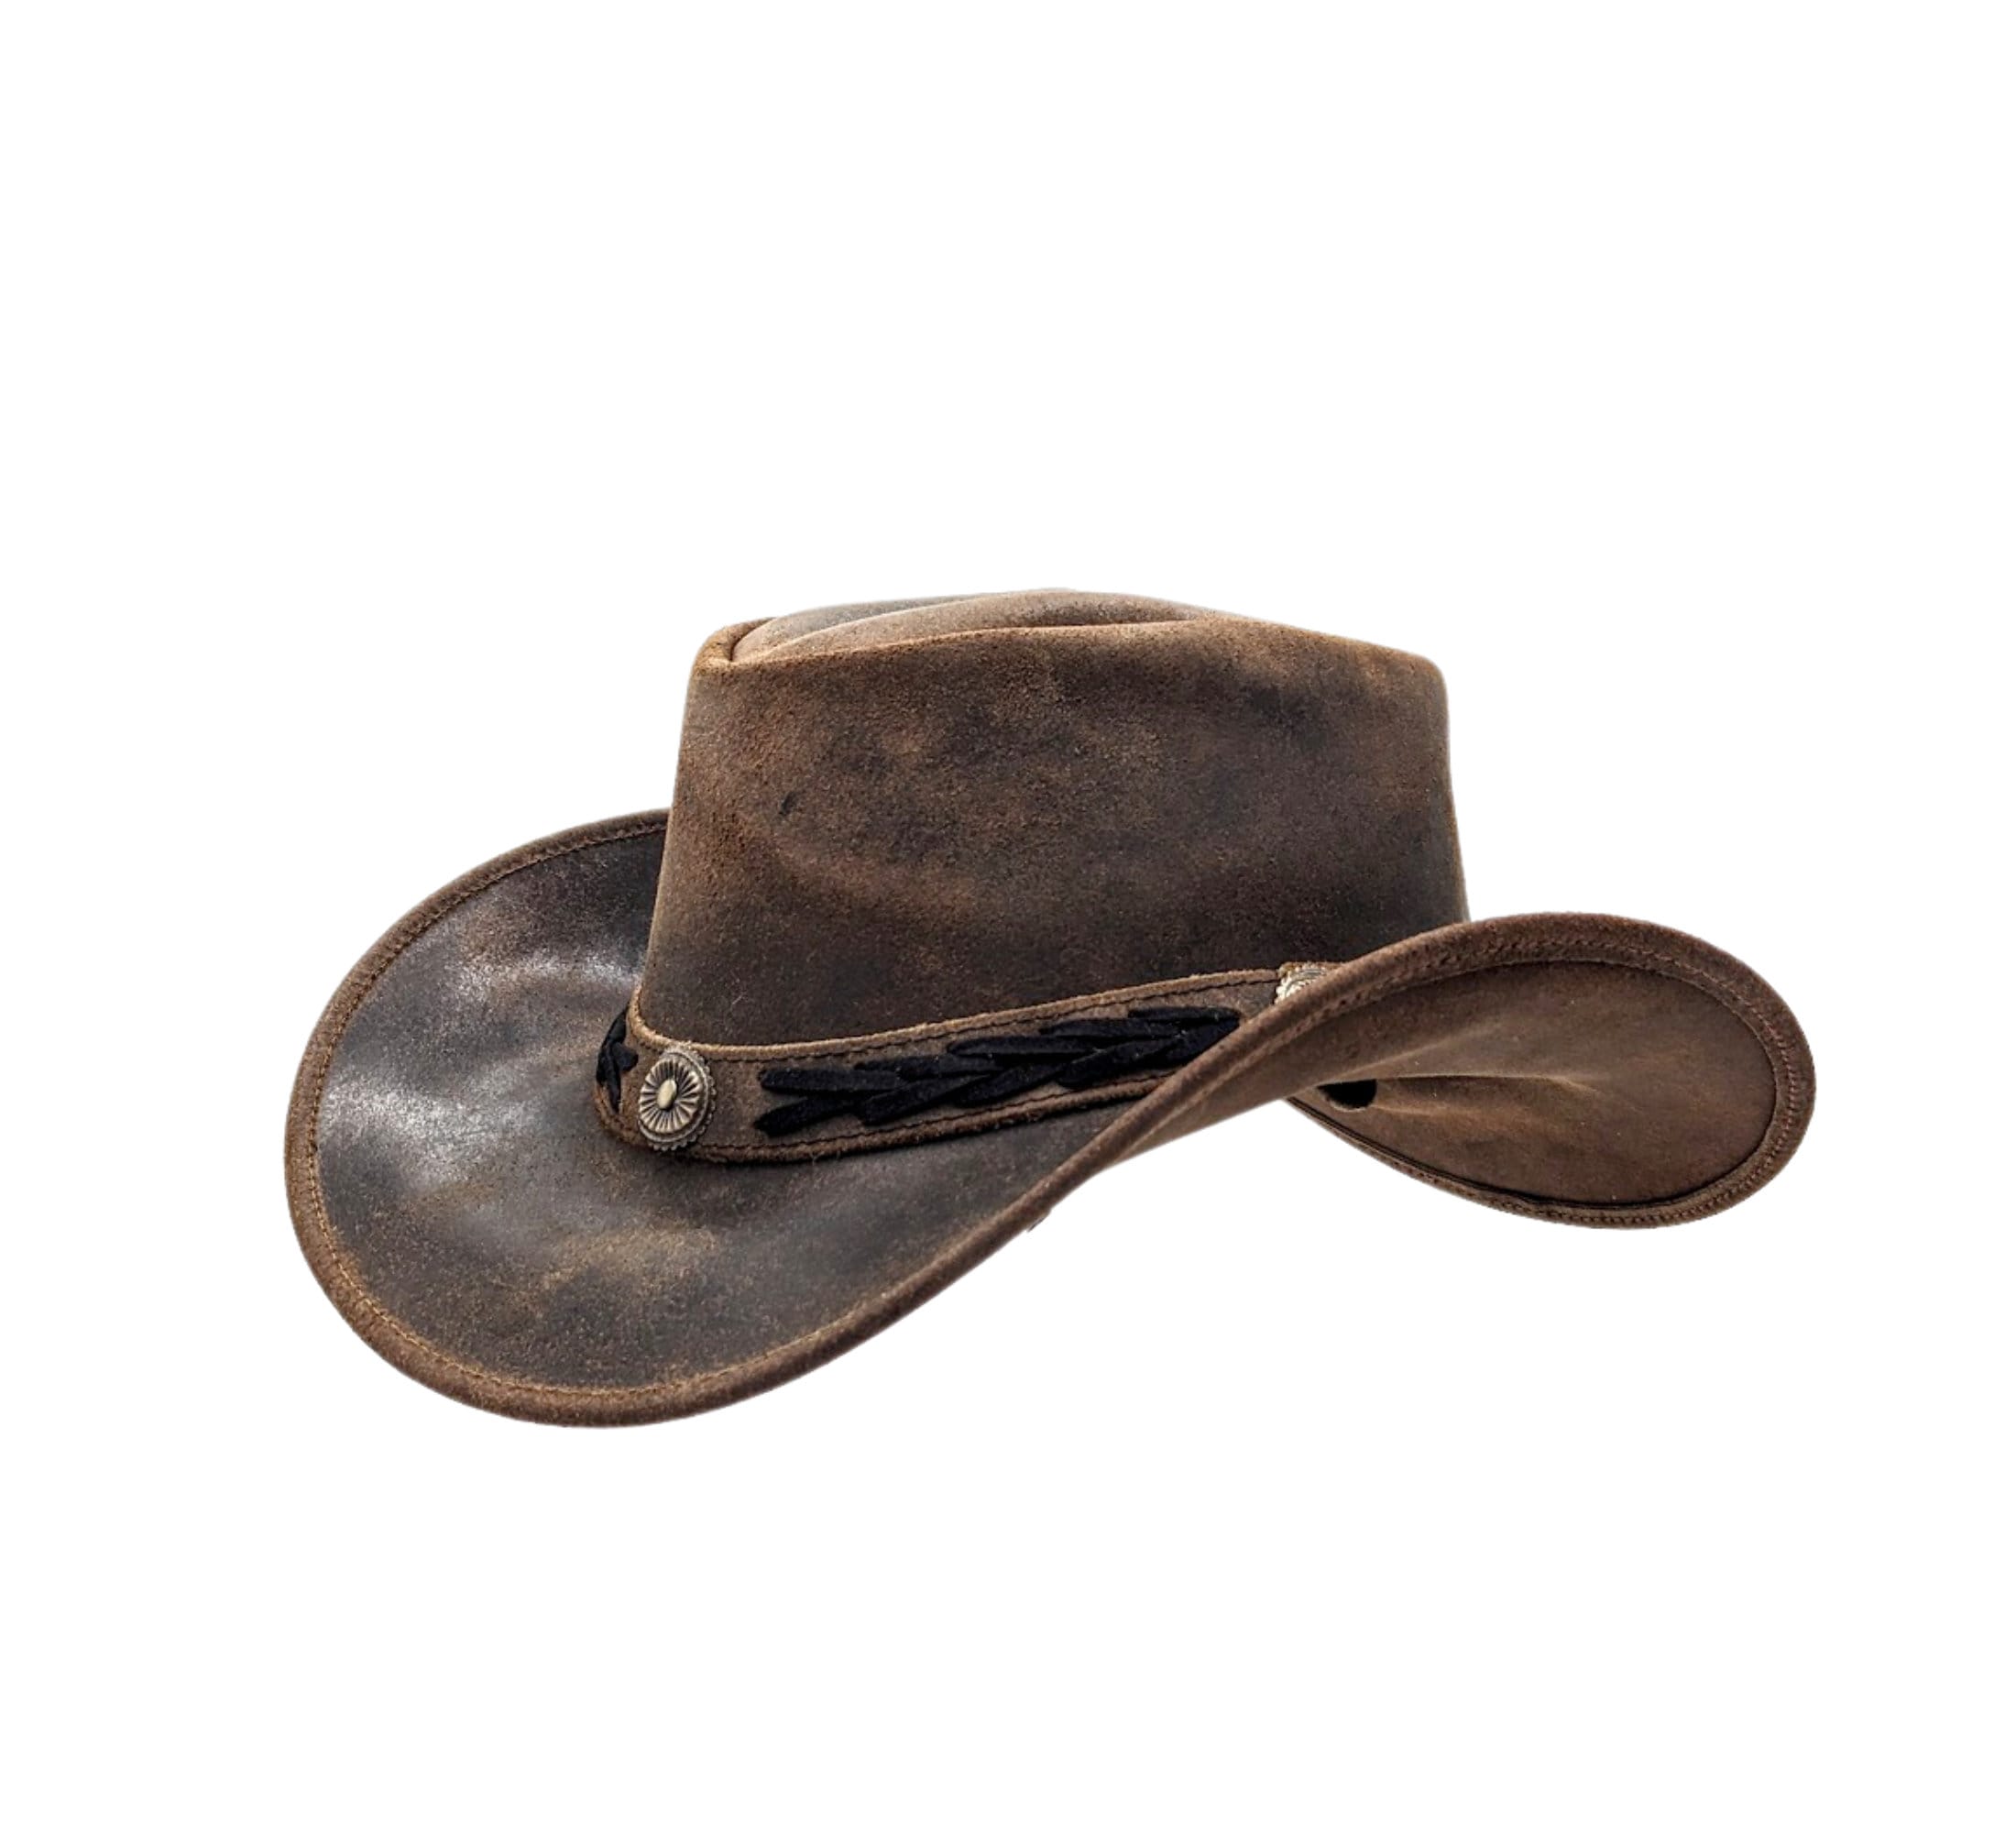 Leather Cowboy Hat - Best Seller